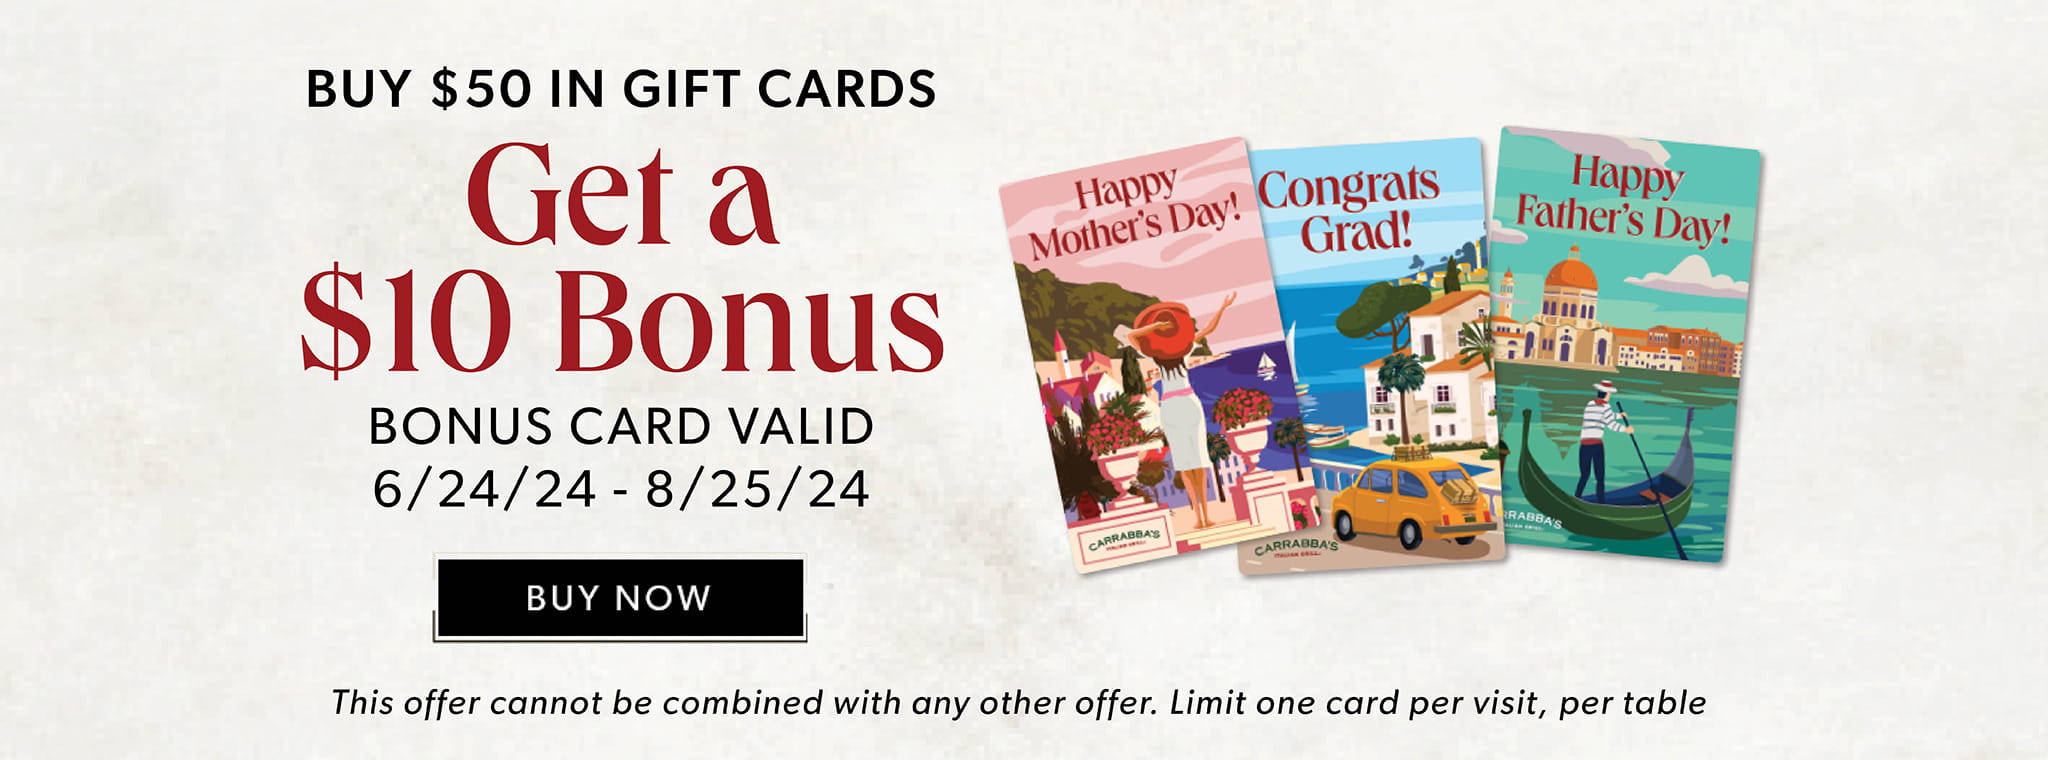 Buy $50 in gift cards, get a $10 bonus